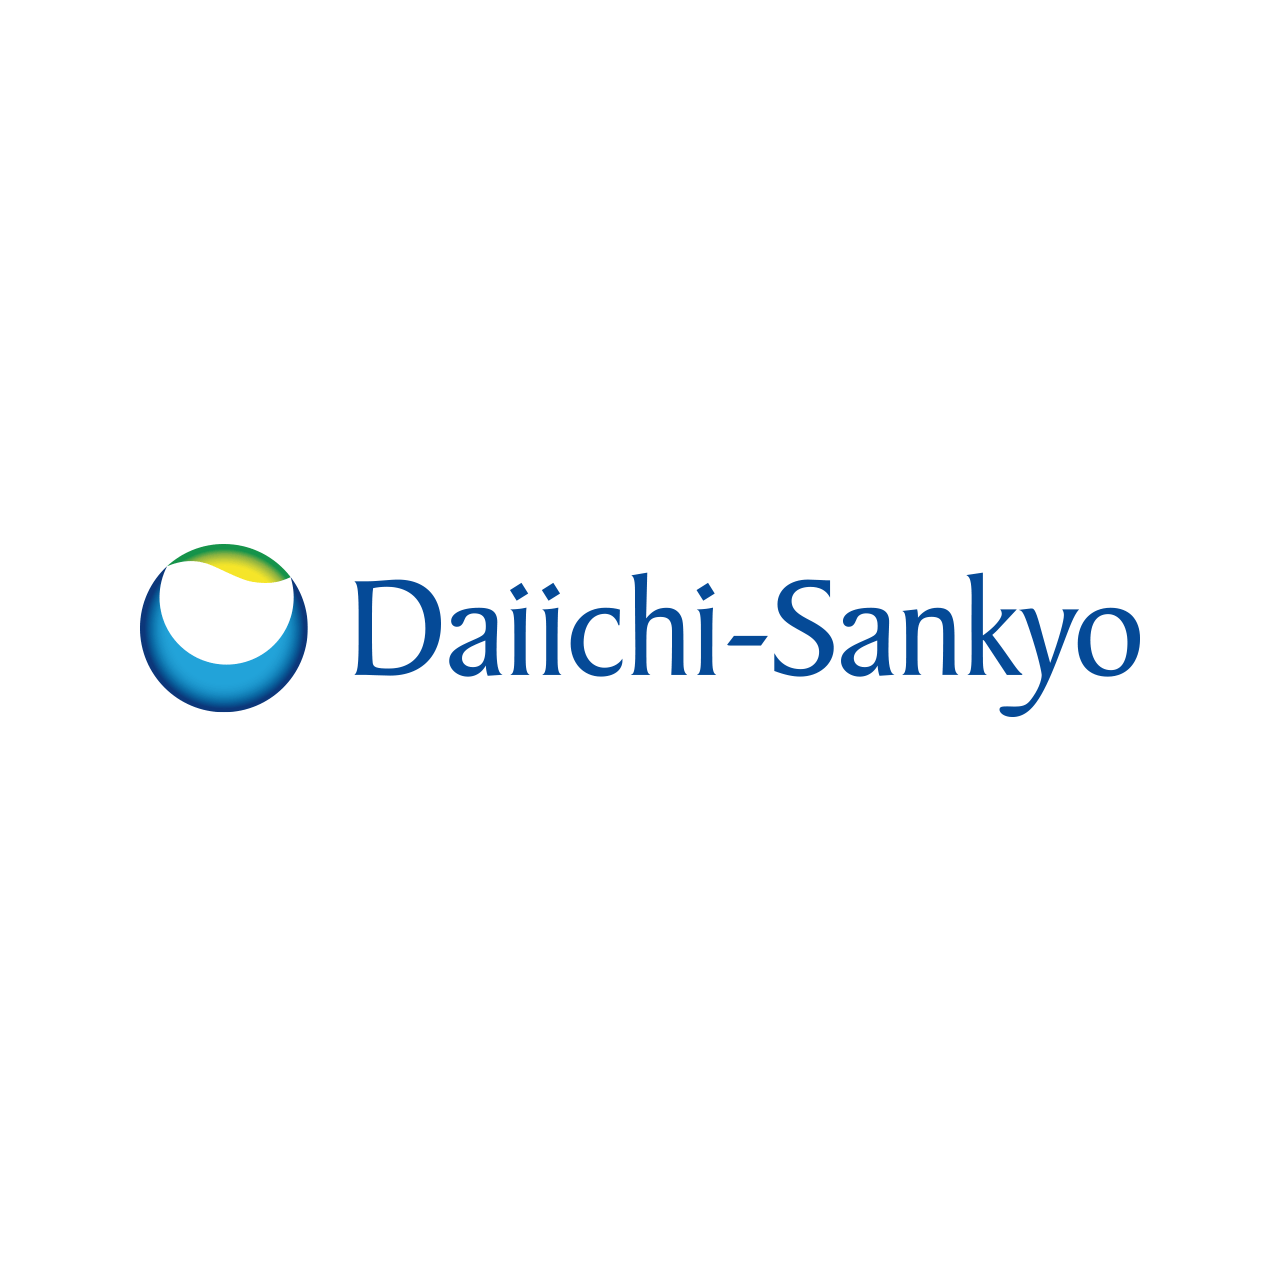 logo cmc sponsor 04 bronze logo daiichisankyo